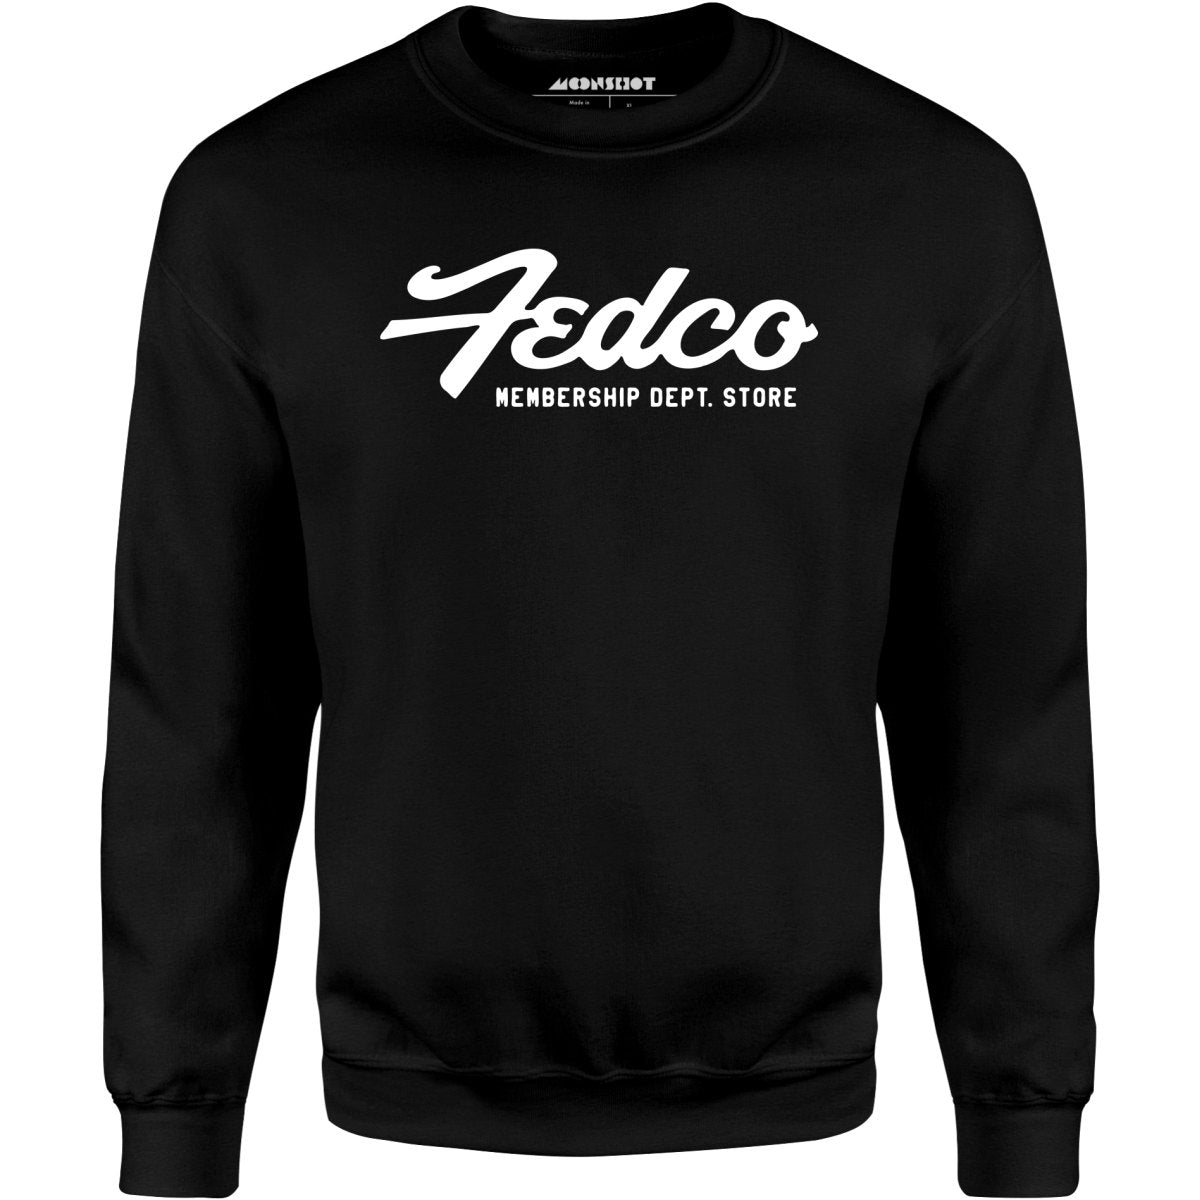 Fedco - Vintage Department Store - Unisex Sweatshirt